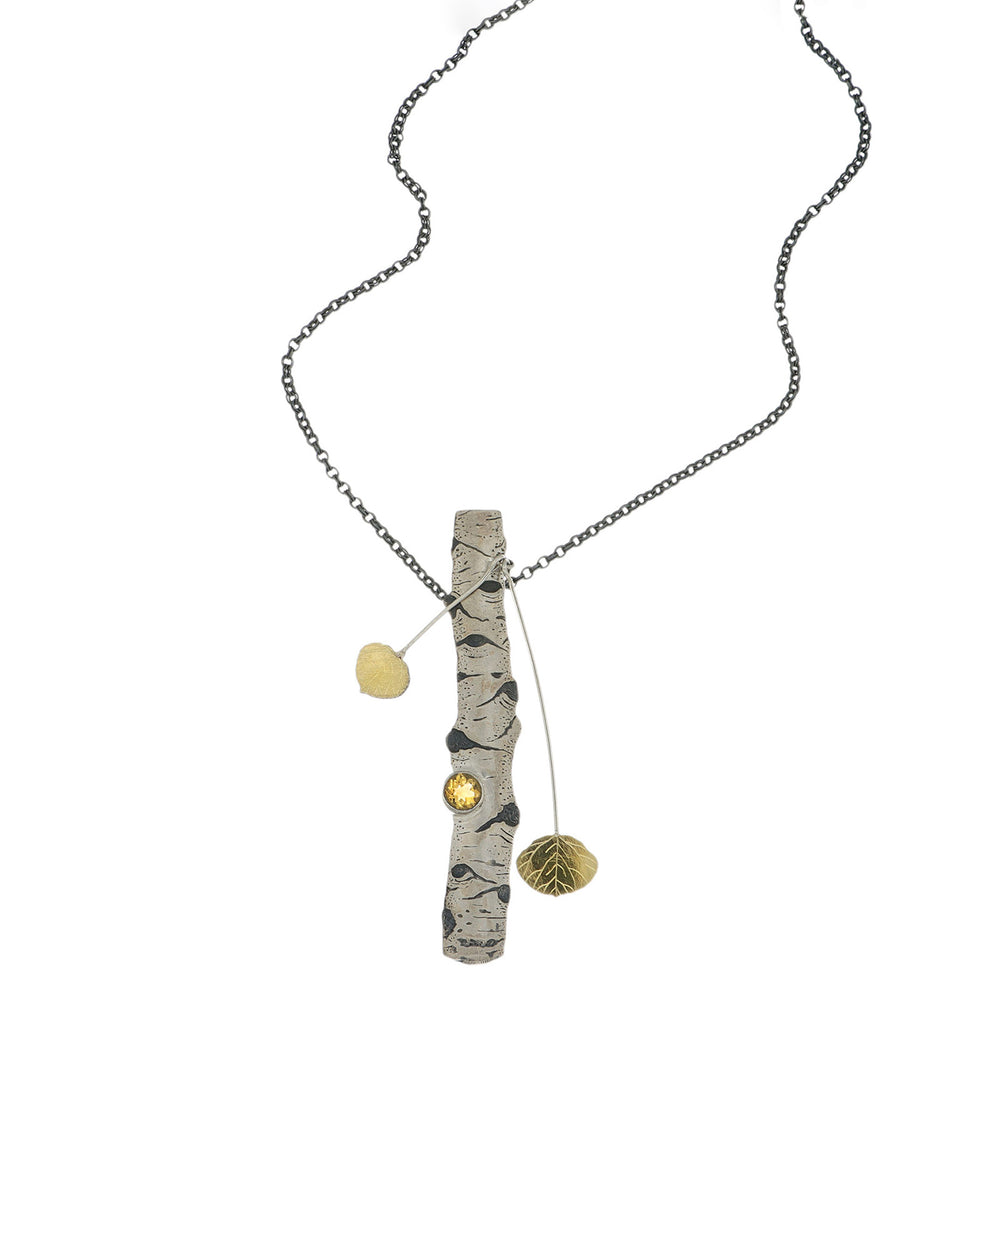 Aspen Allure pendant with Citrine